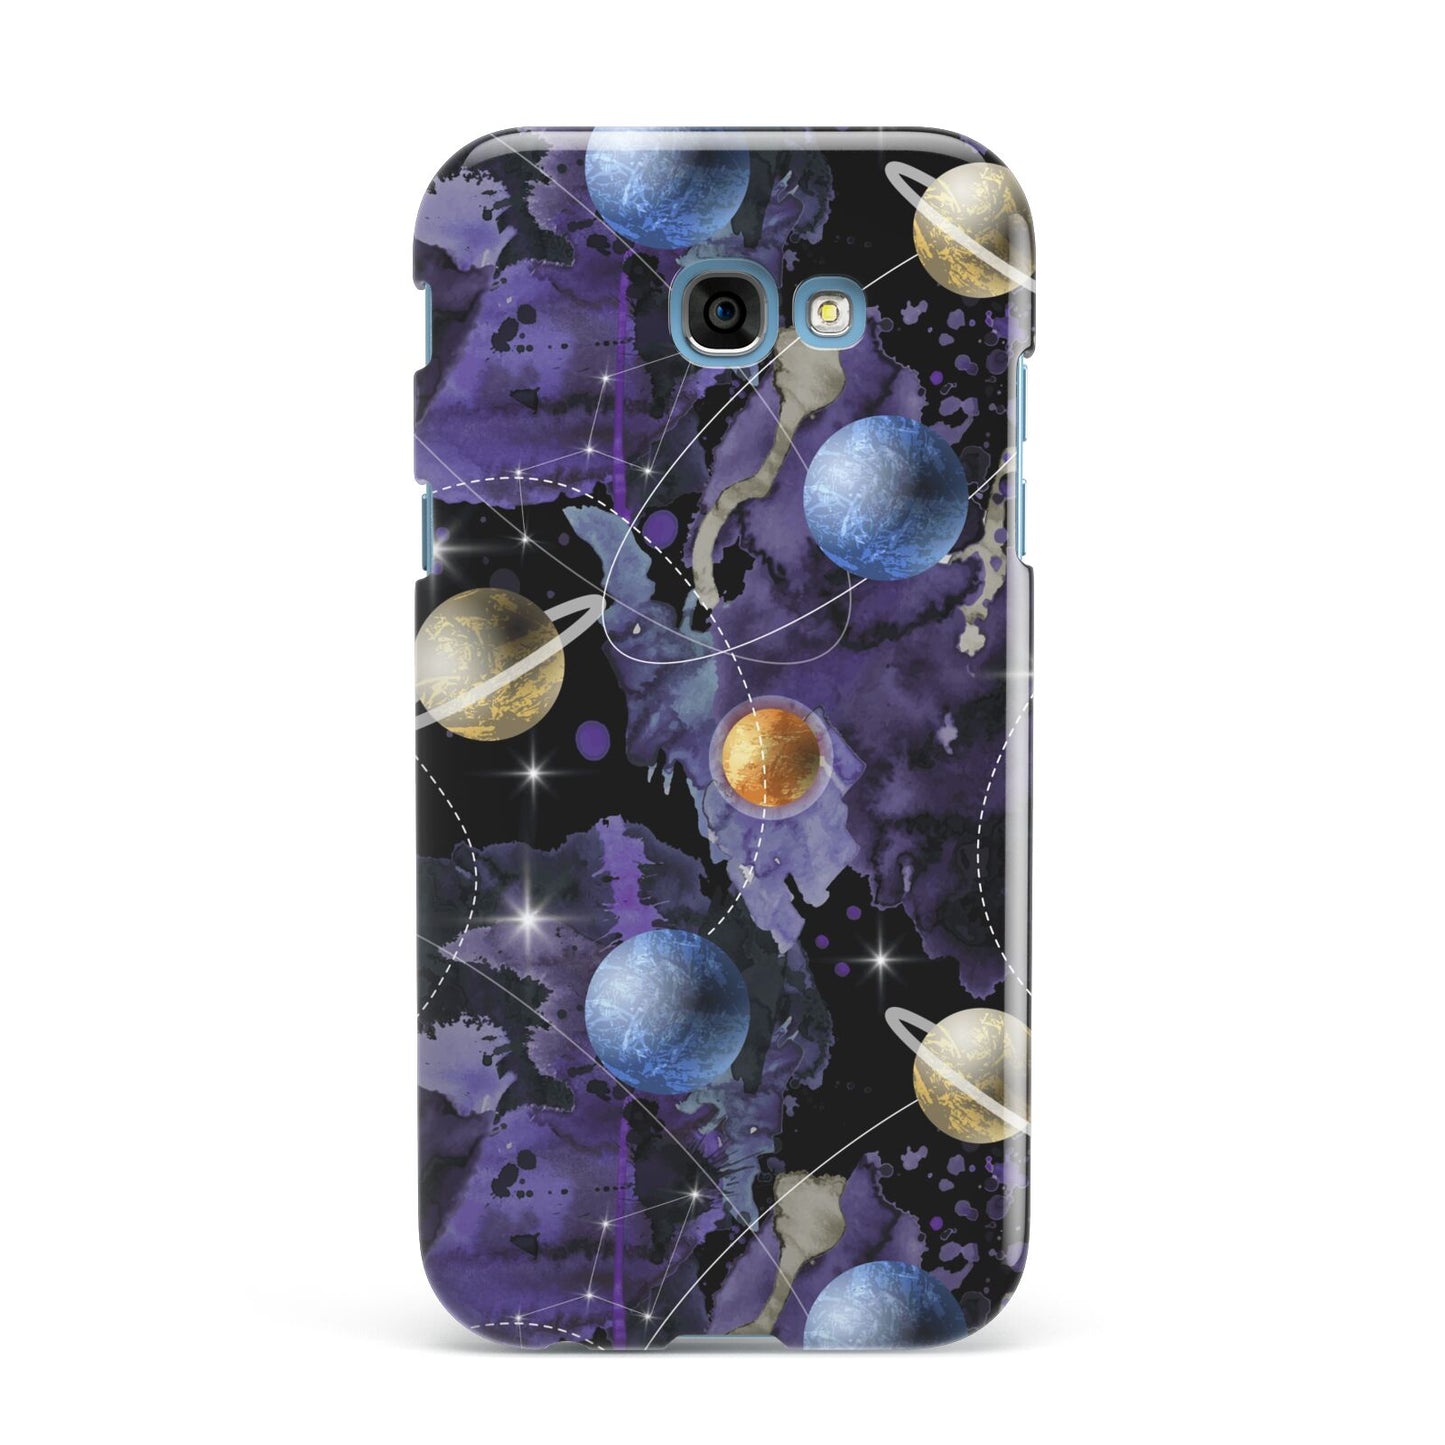 Planet Samsung Galaxy A7 2017 Case